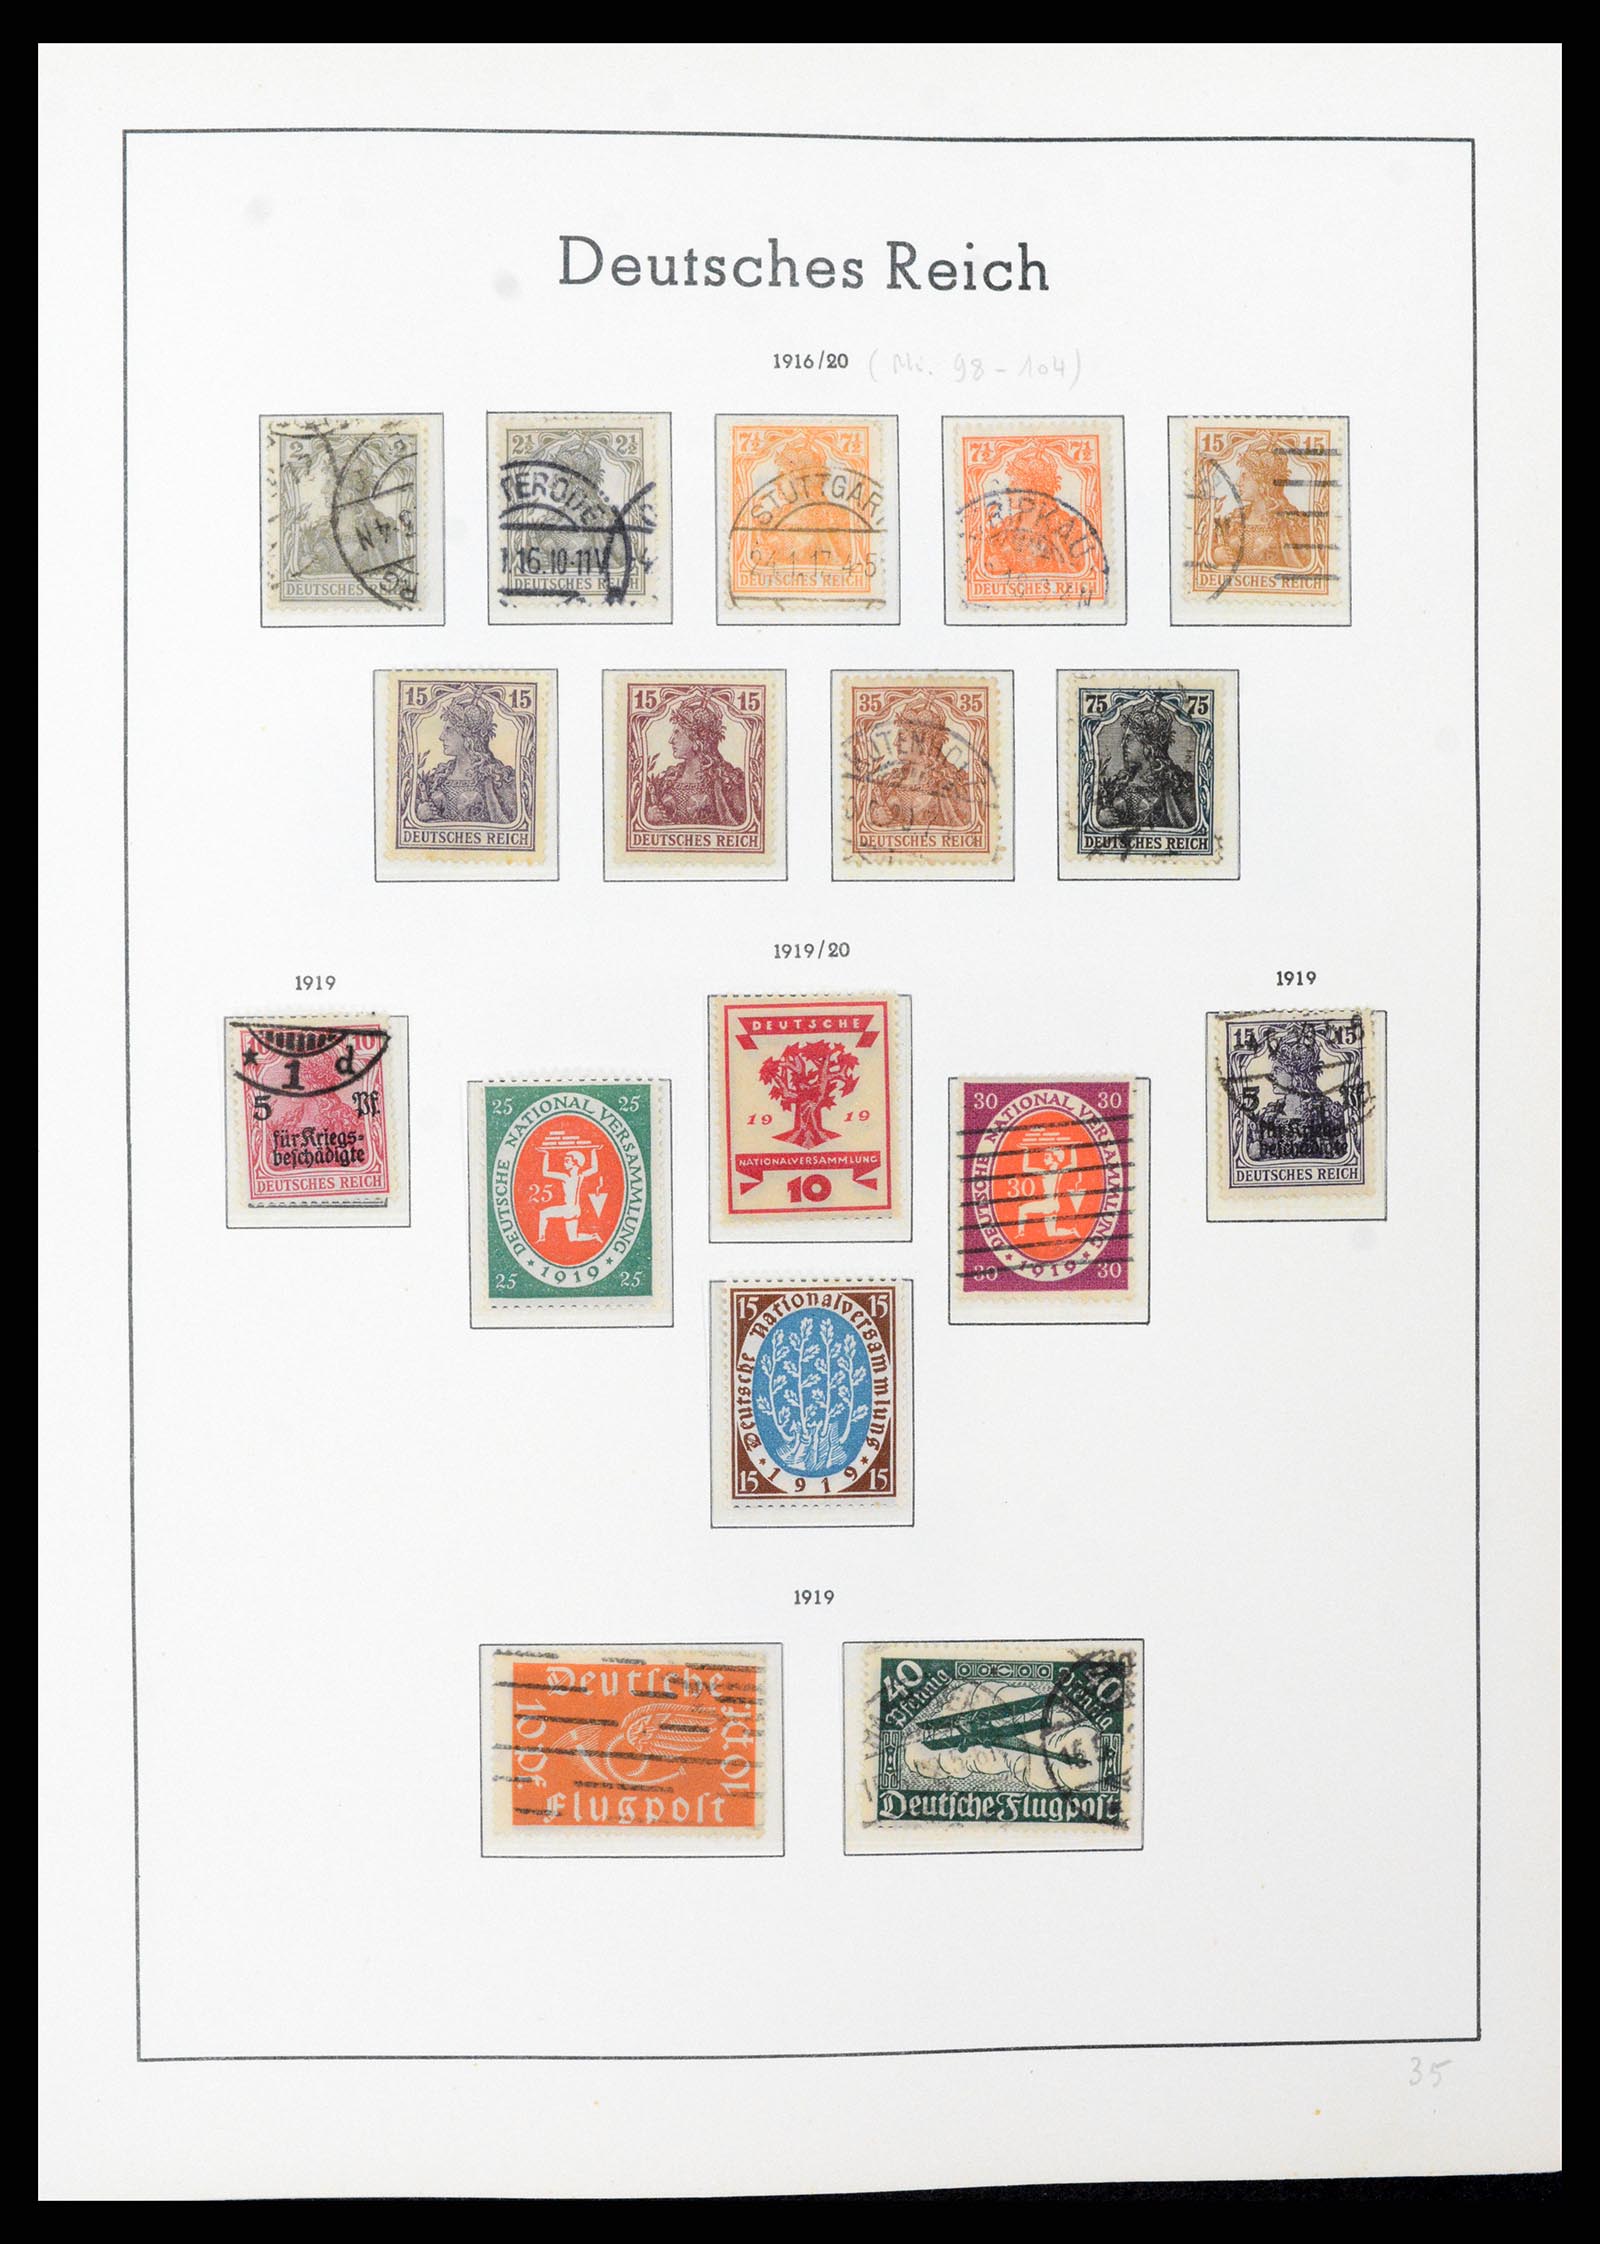 37589 011 - Stamp collection 37589 German Reich 1872-1945.